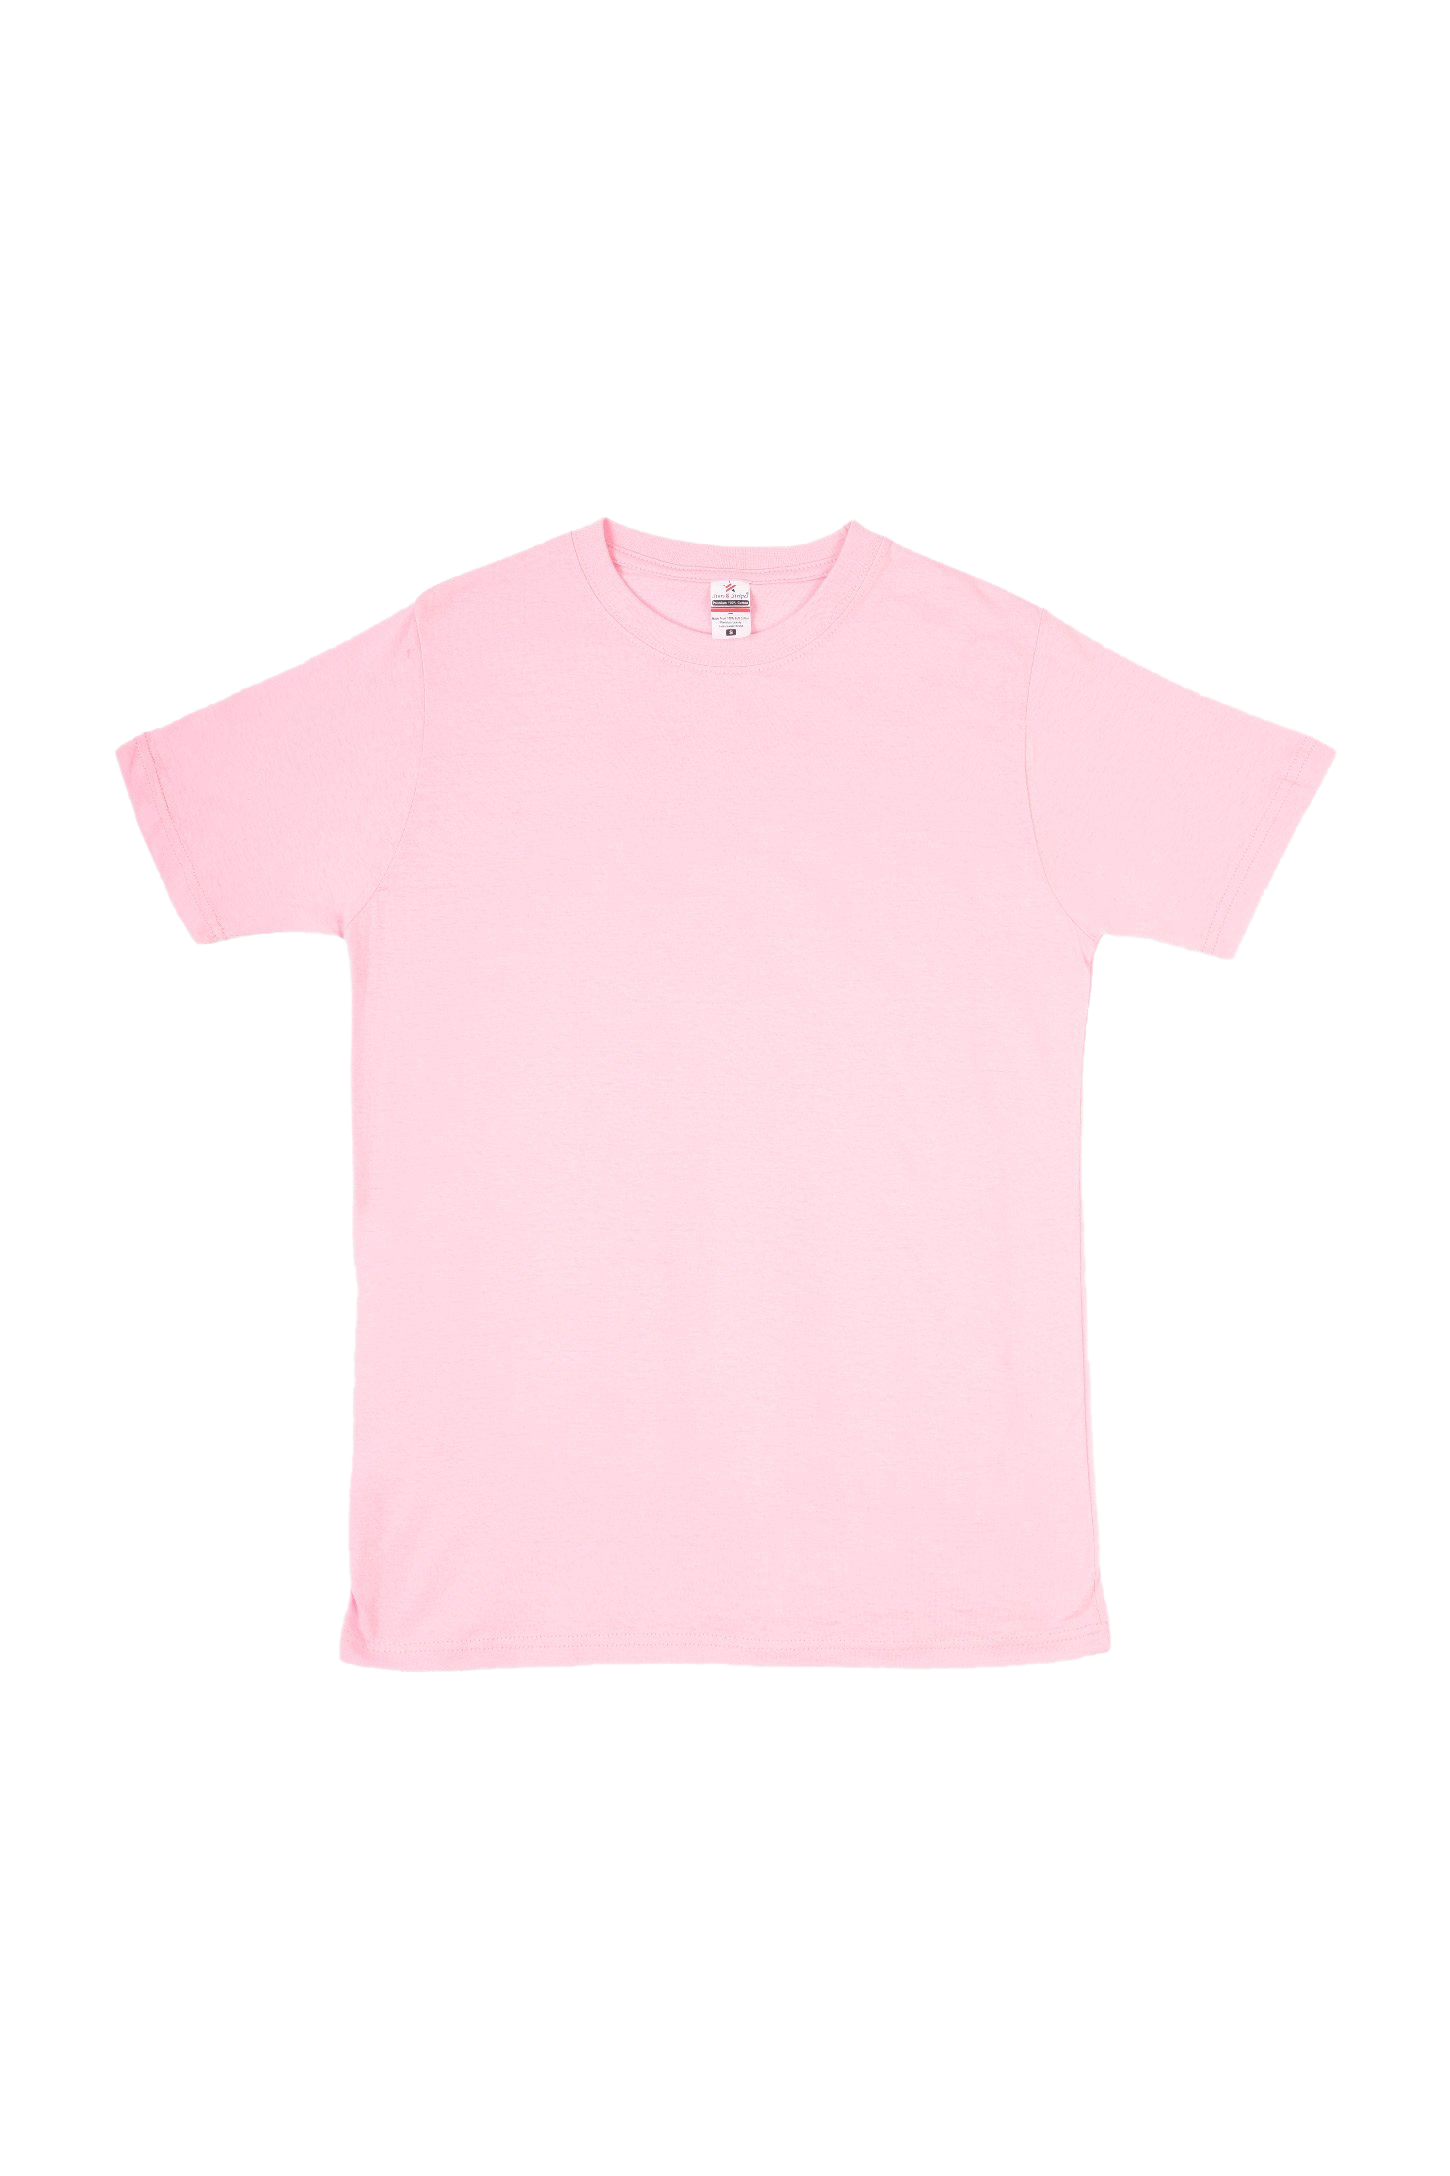 Plain Pink T-Shirt PNG High-Quality Image